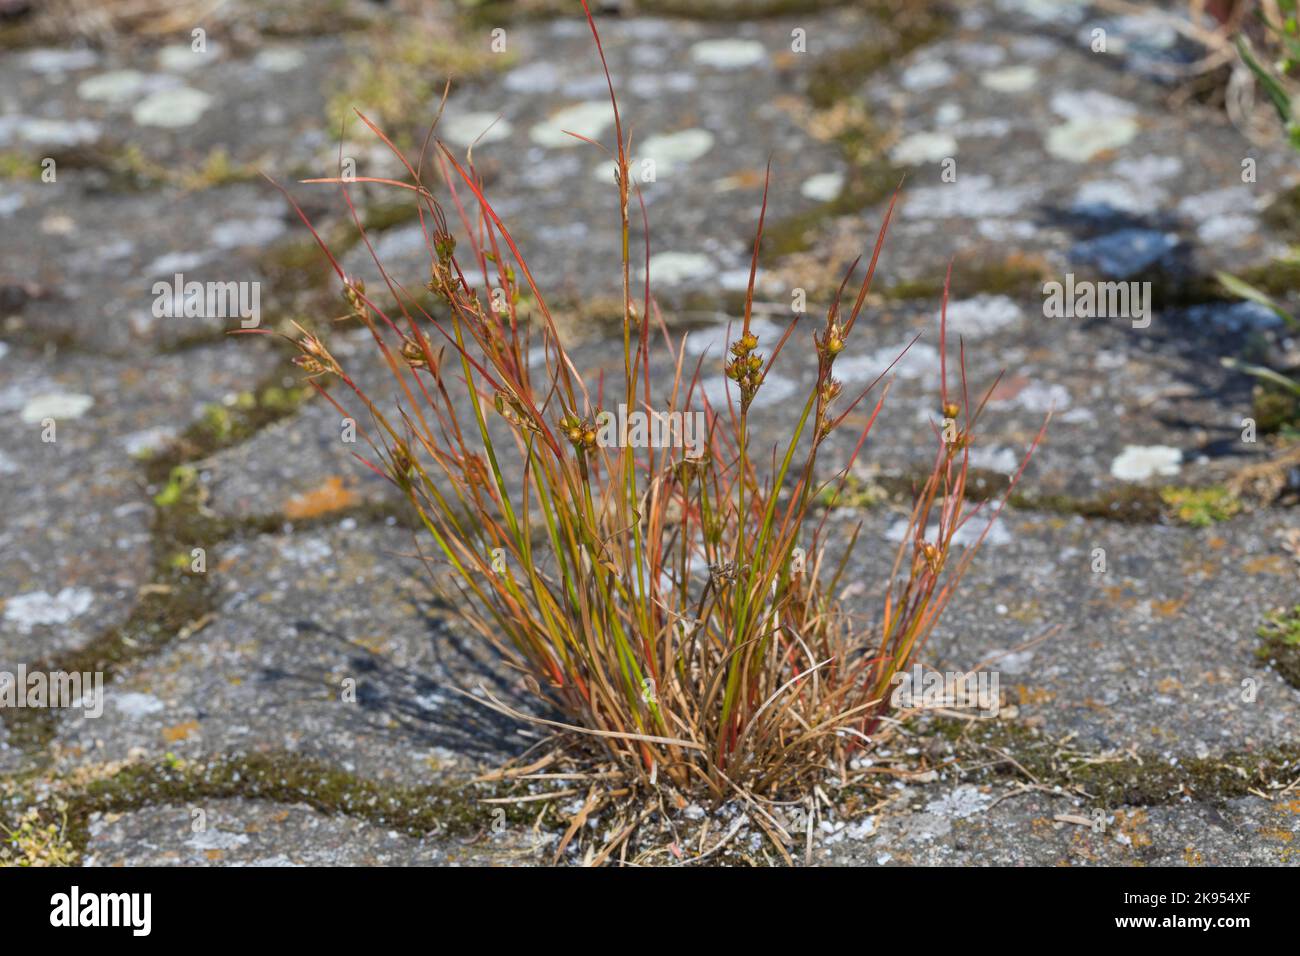 slender rush, path rush (Juncus tenuis), grows in paving gaps, Germany Stock Photo